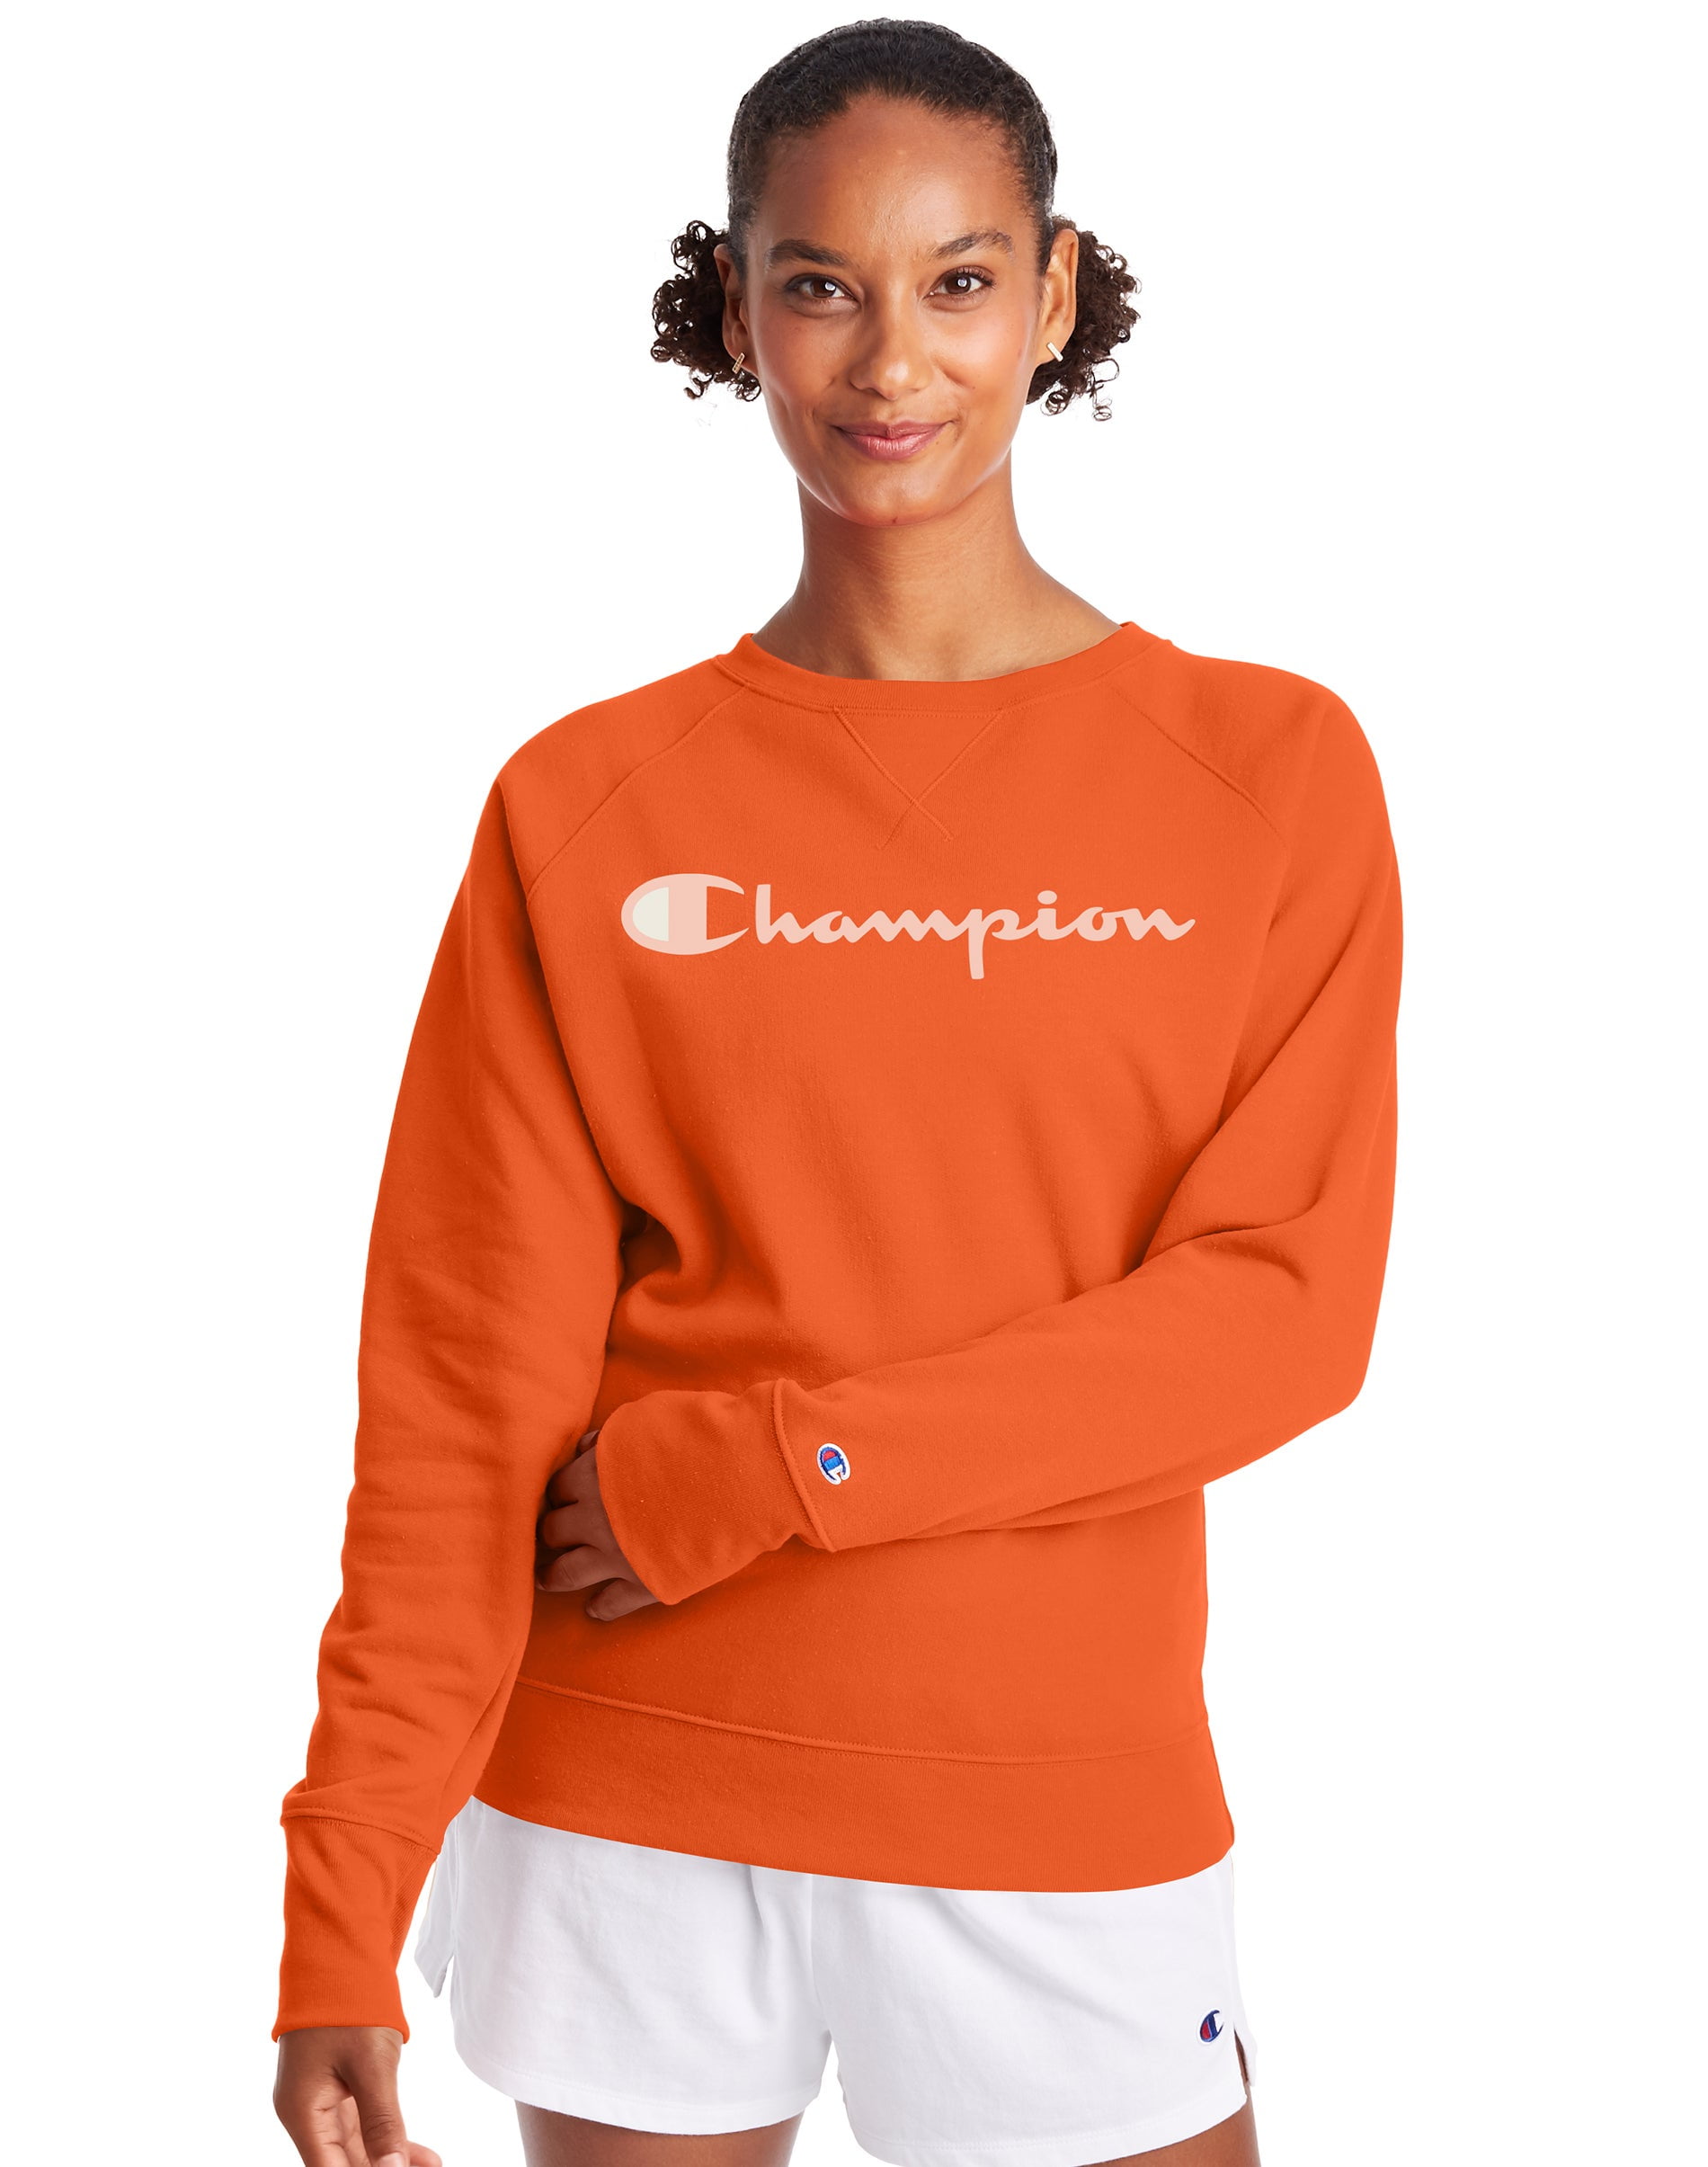 Champion Women Crewneck Long Sleeve athletic sweatshirts - Walmart.com